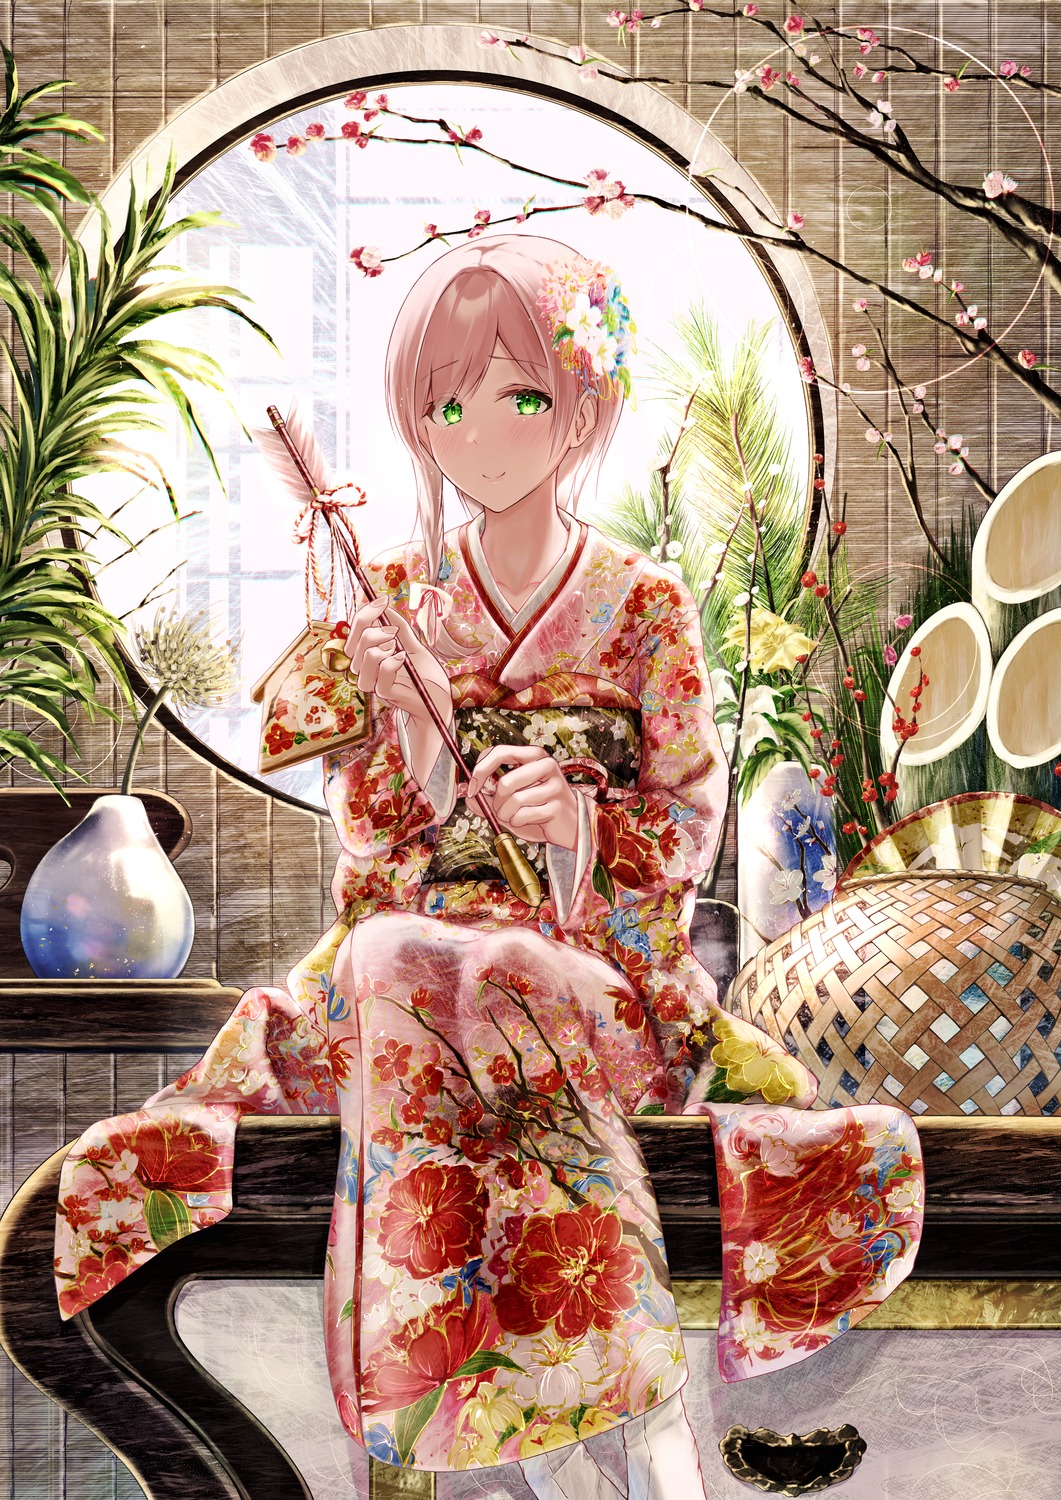 kimono meen_(ouaughikepdvrsf)